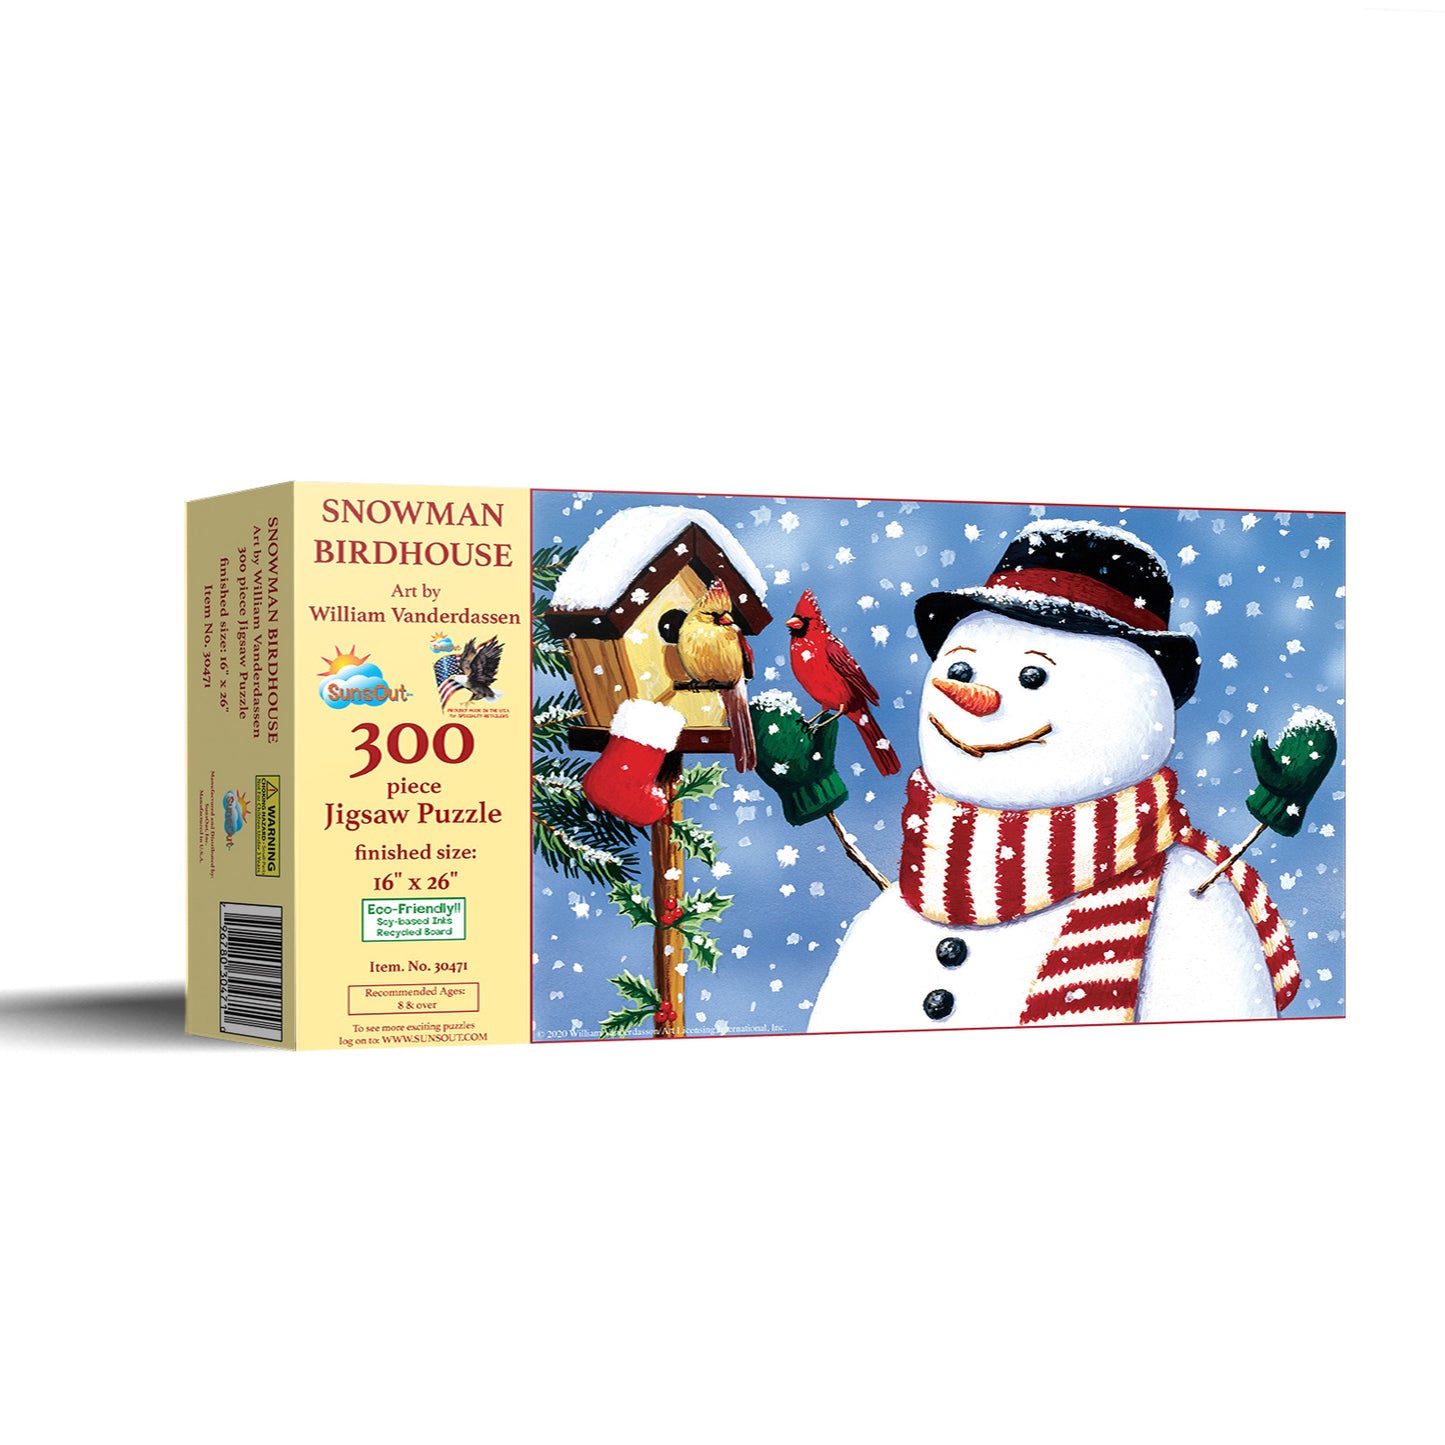 Snowman/Birdhouse - 300 Piece Jigsaw Puzzle